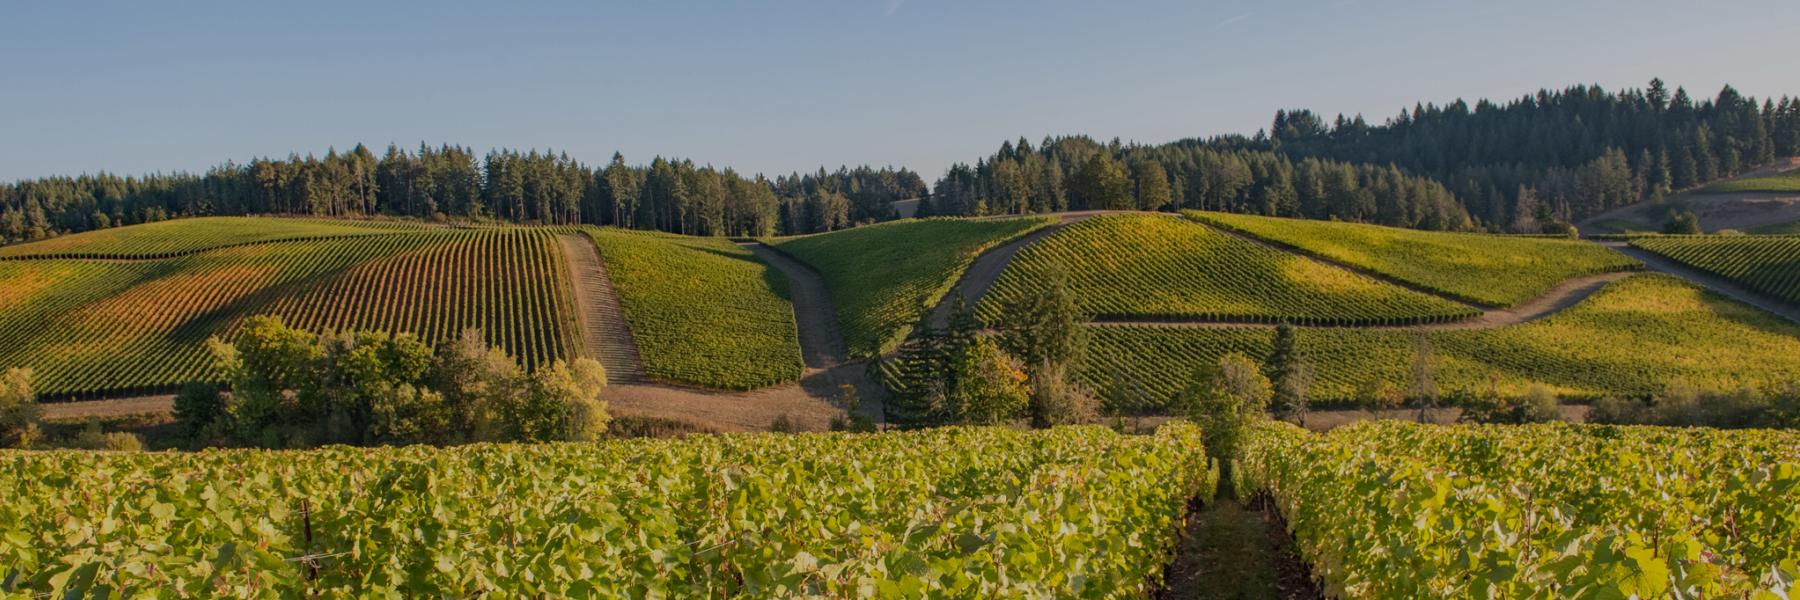 Gran Moraine vineyard, Willamette Valley, Oregon